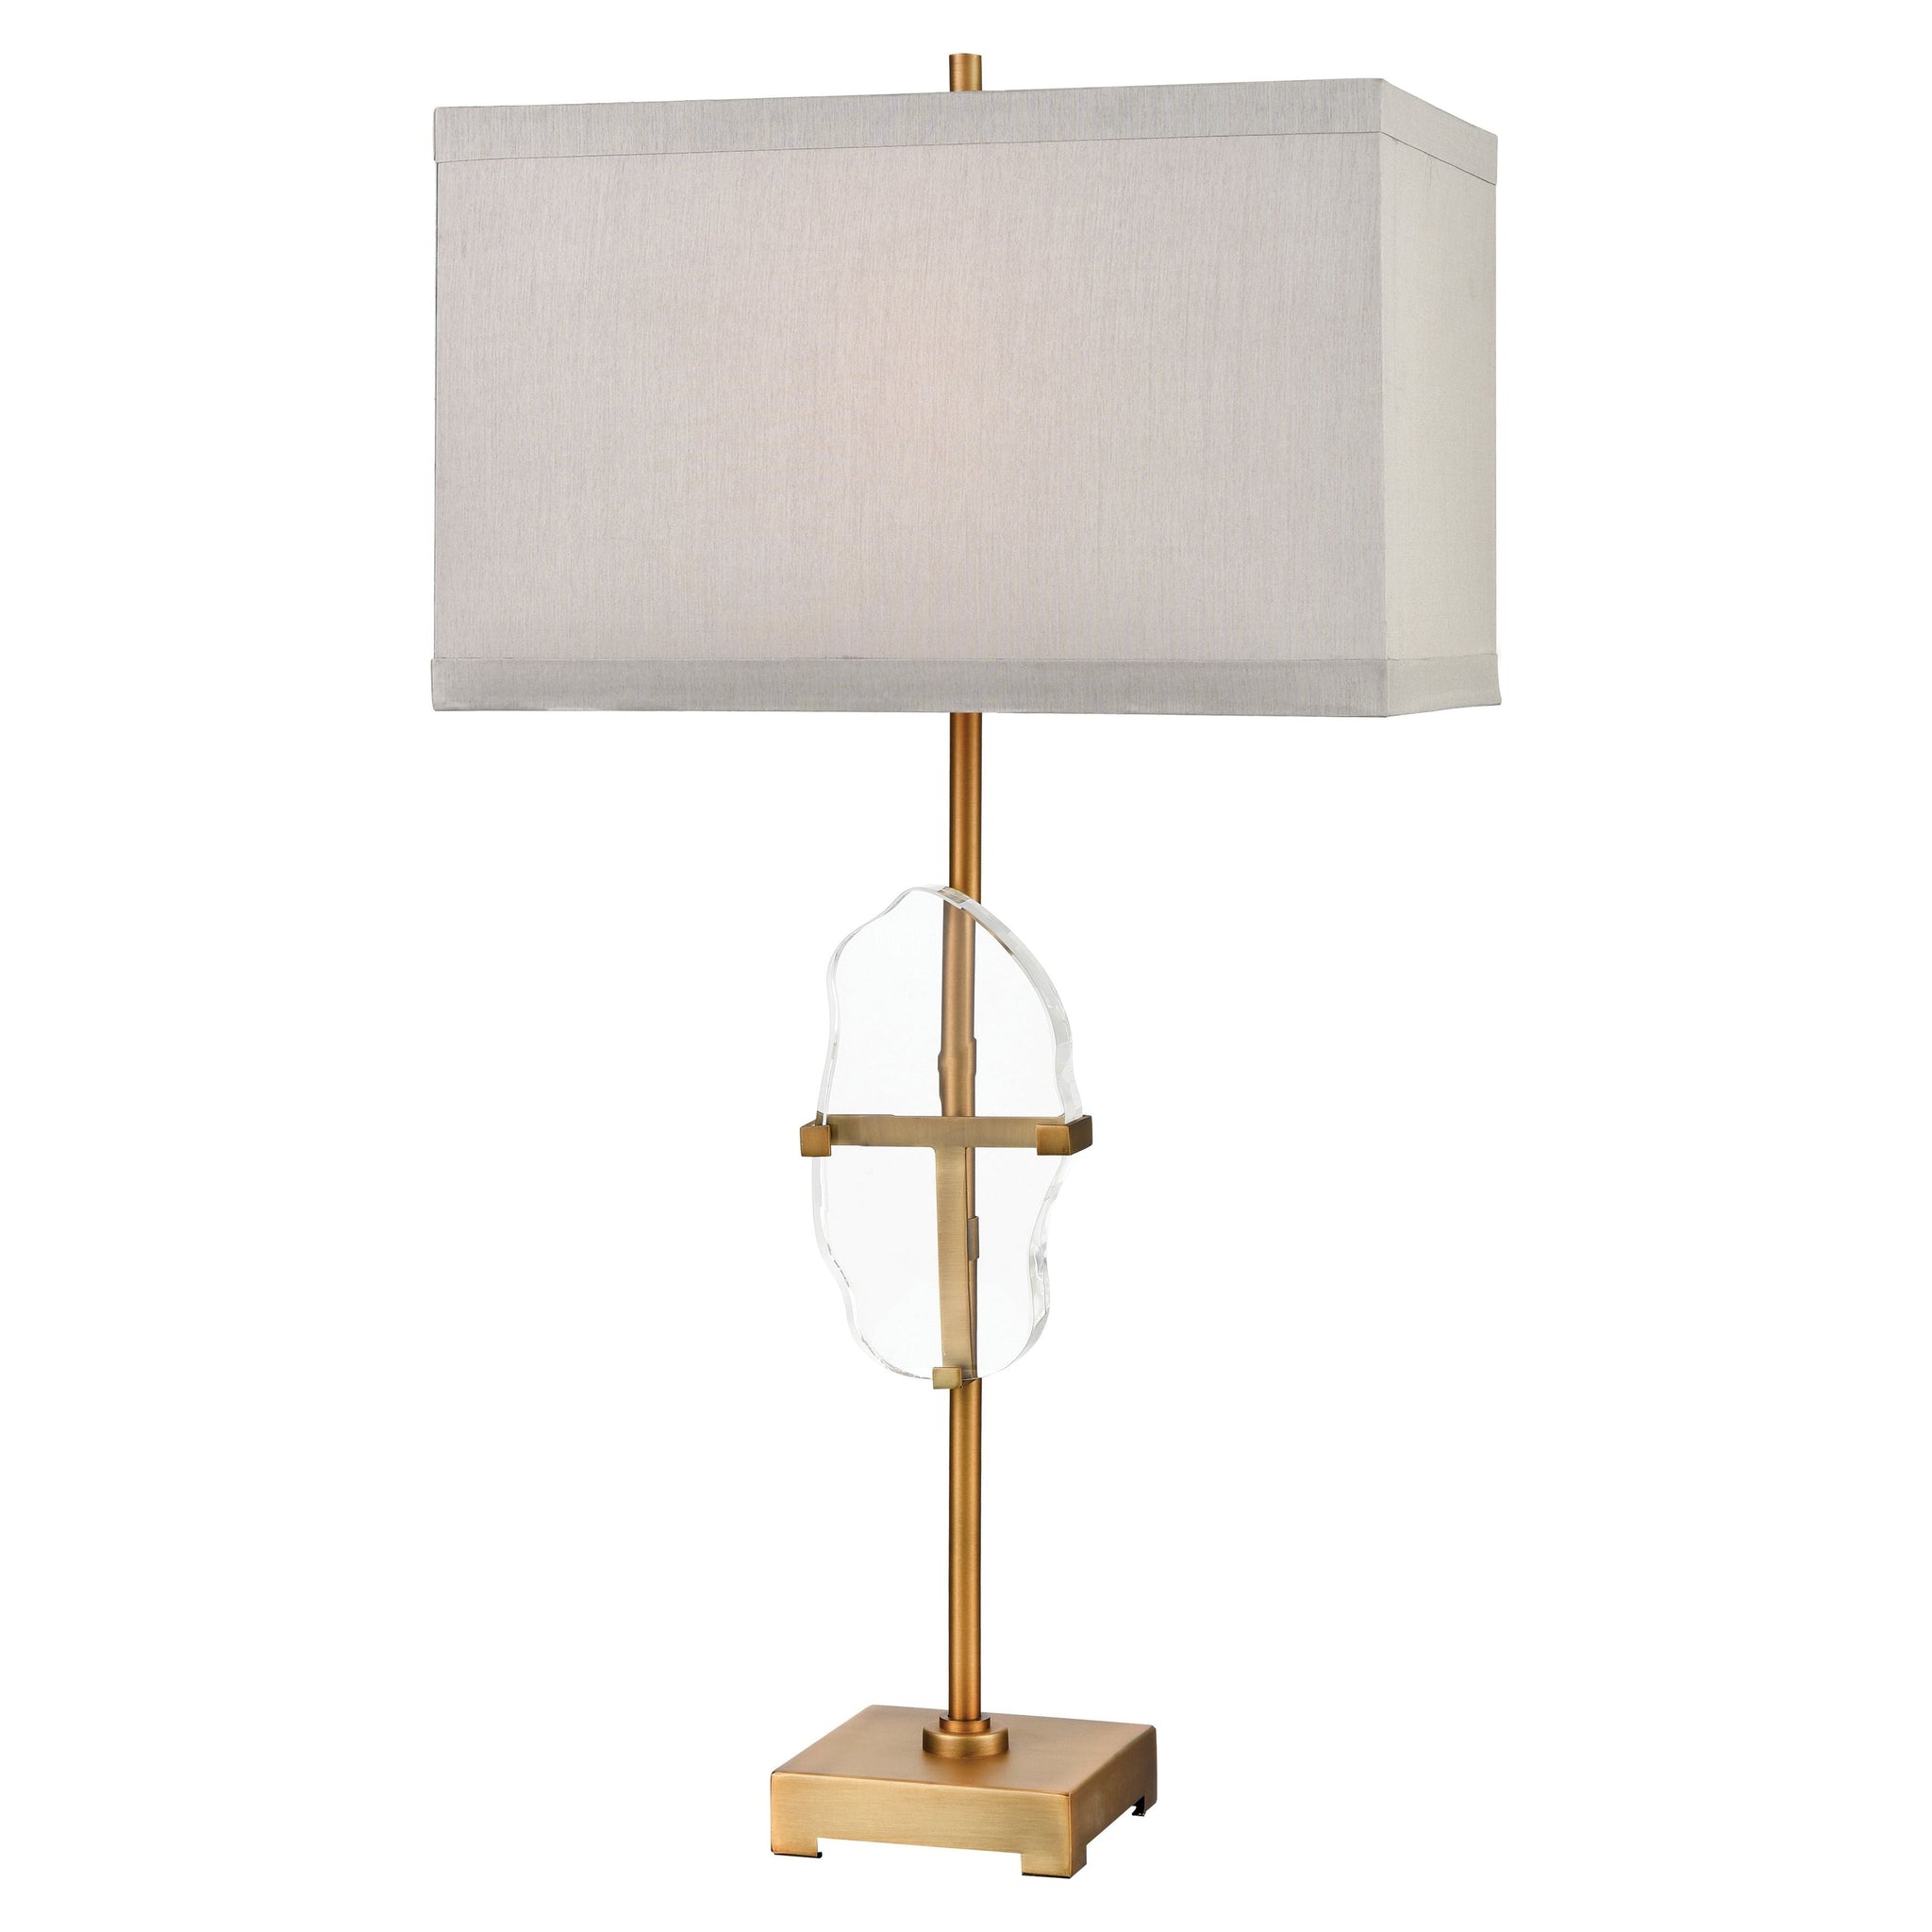 Priorato 34" High 1-Light Table Lamp